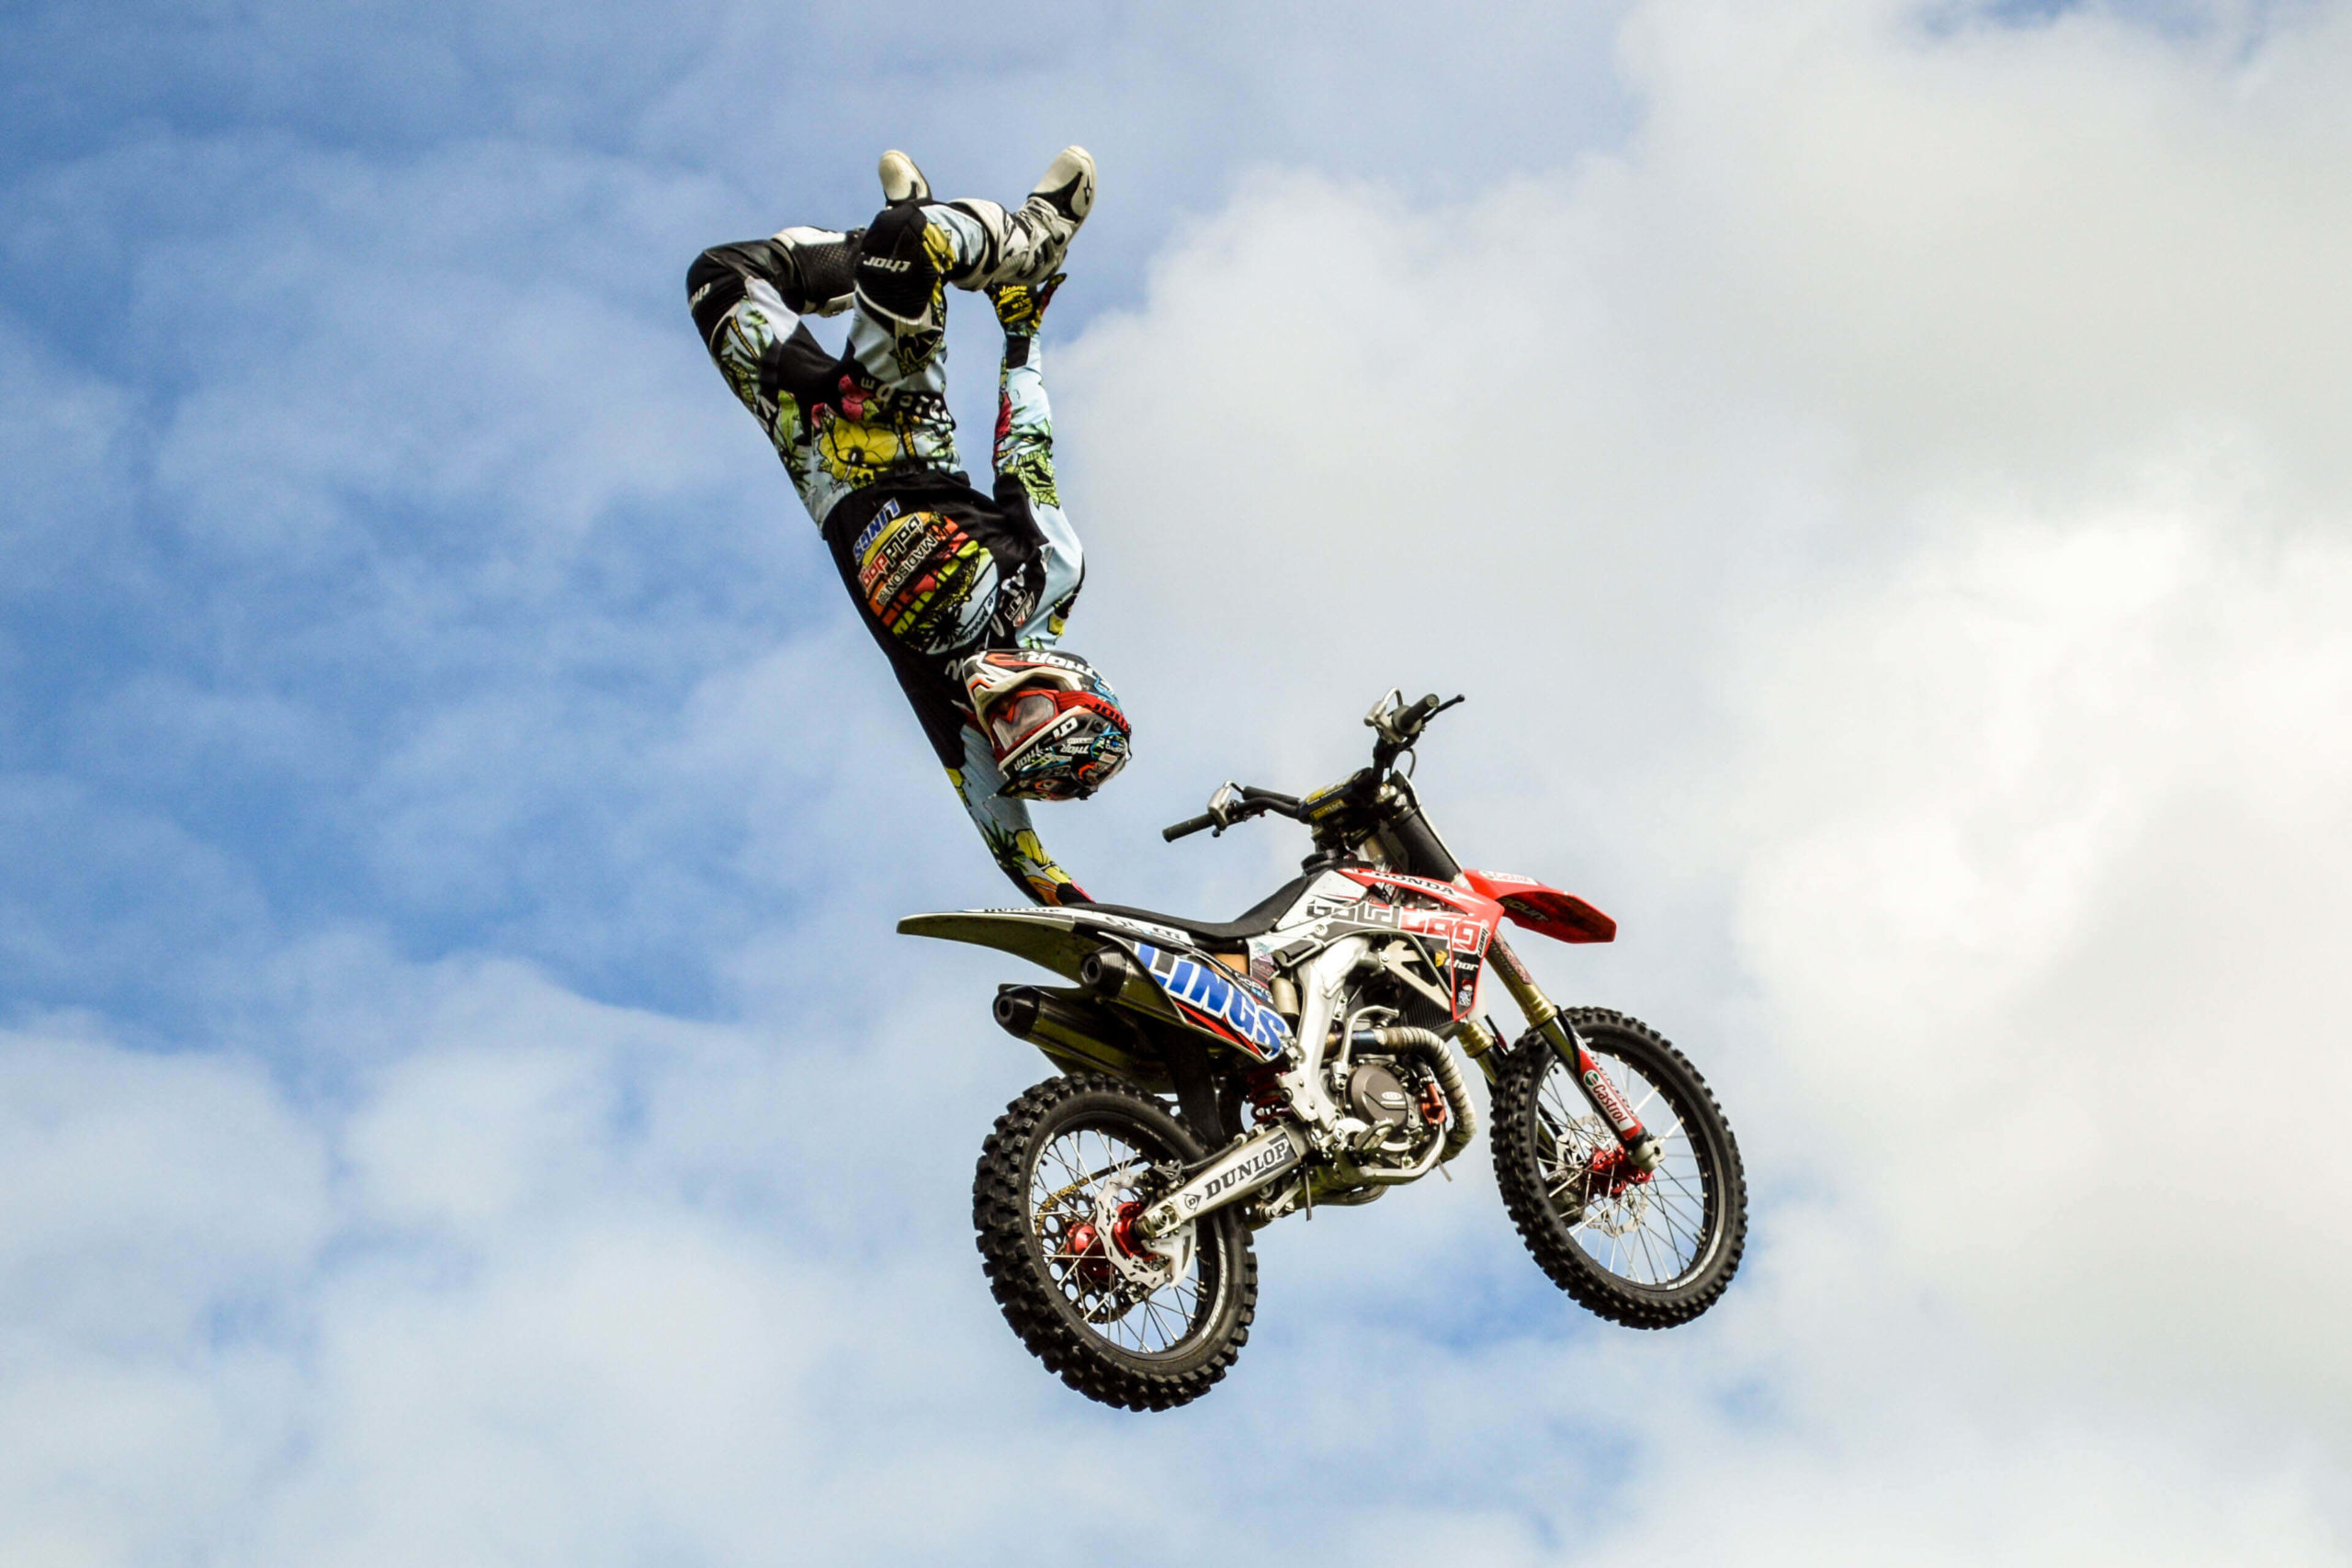 Motorised stunt performers show